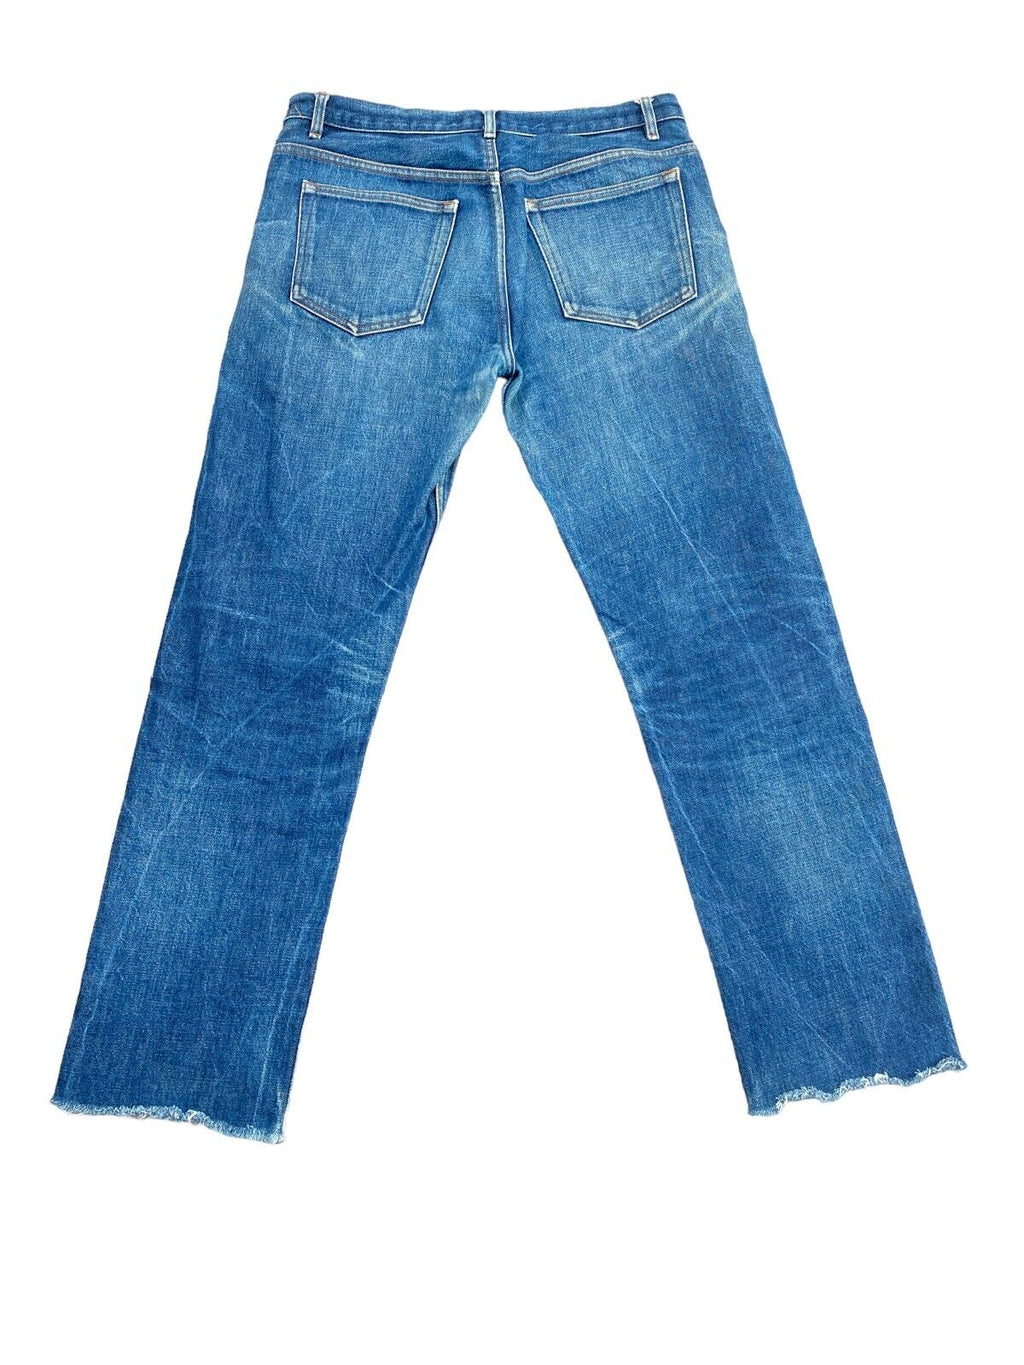 New Standard  Denim jeans   Butler Denim Jeans